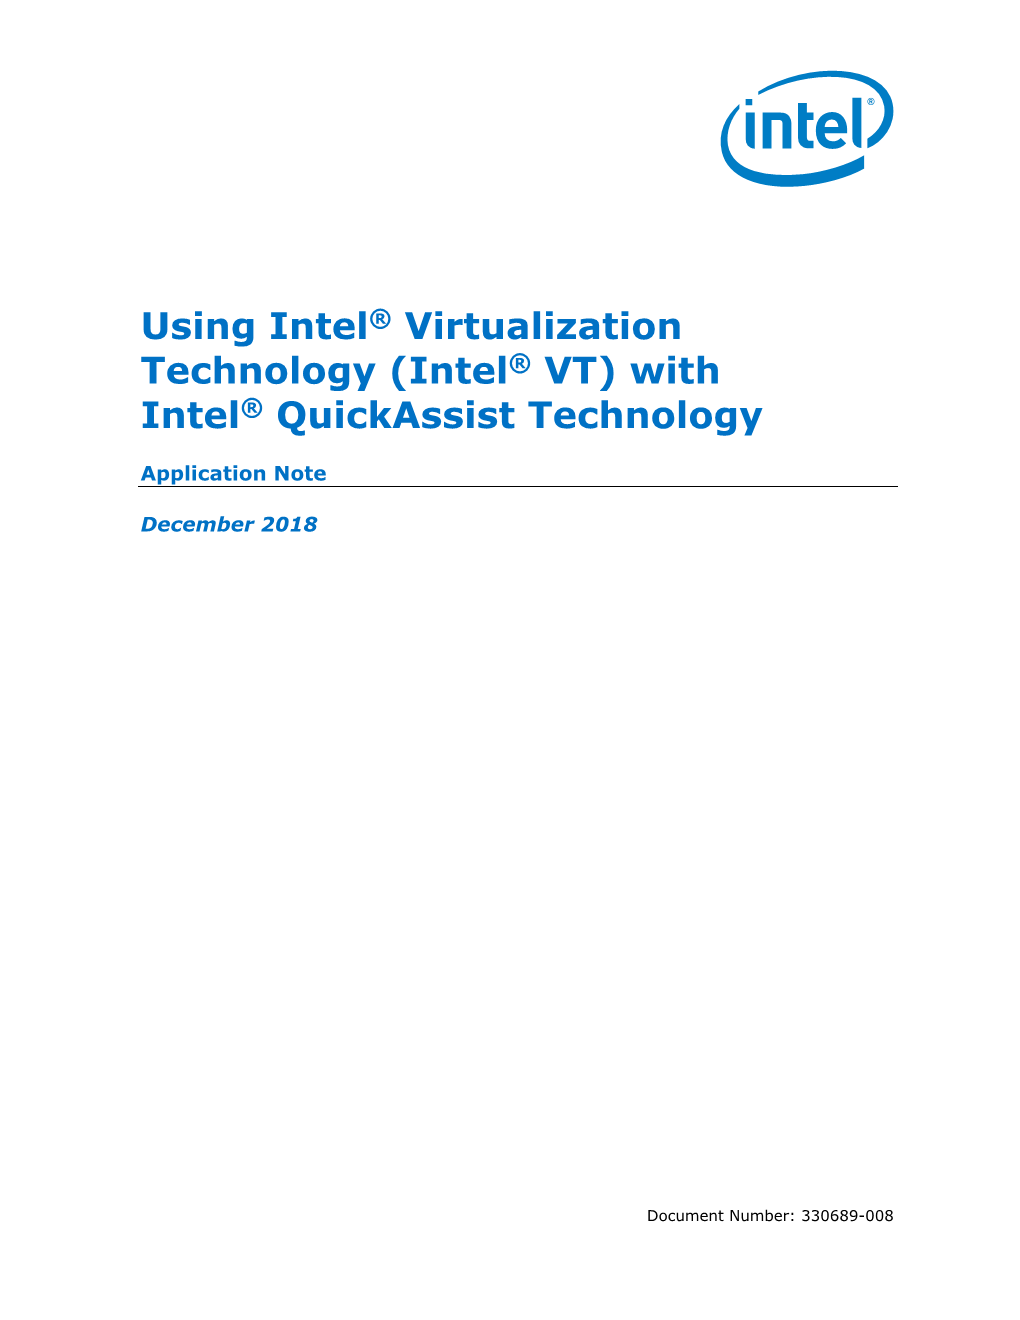 Using Intel® Virtualization Technology (Intel® VT) with Intel® Quickassist Technology